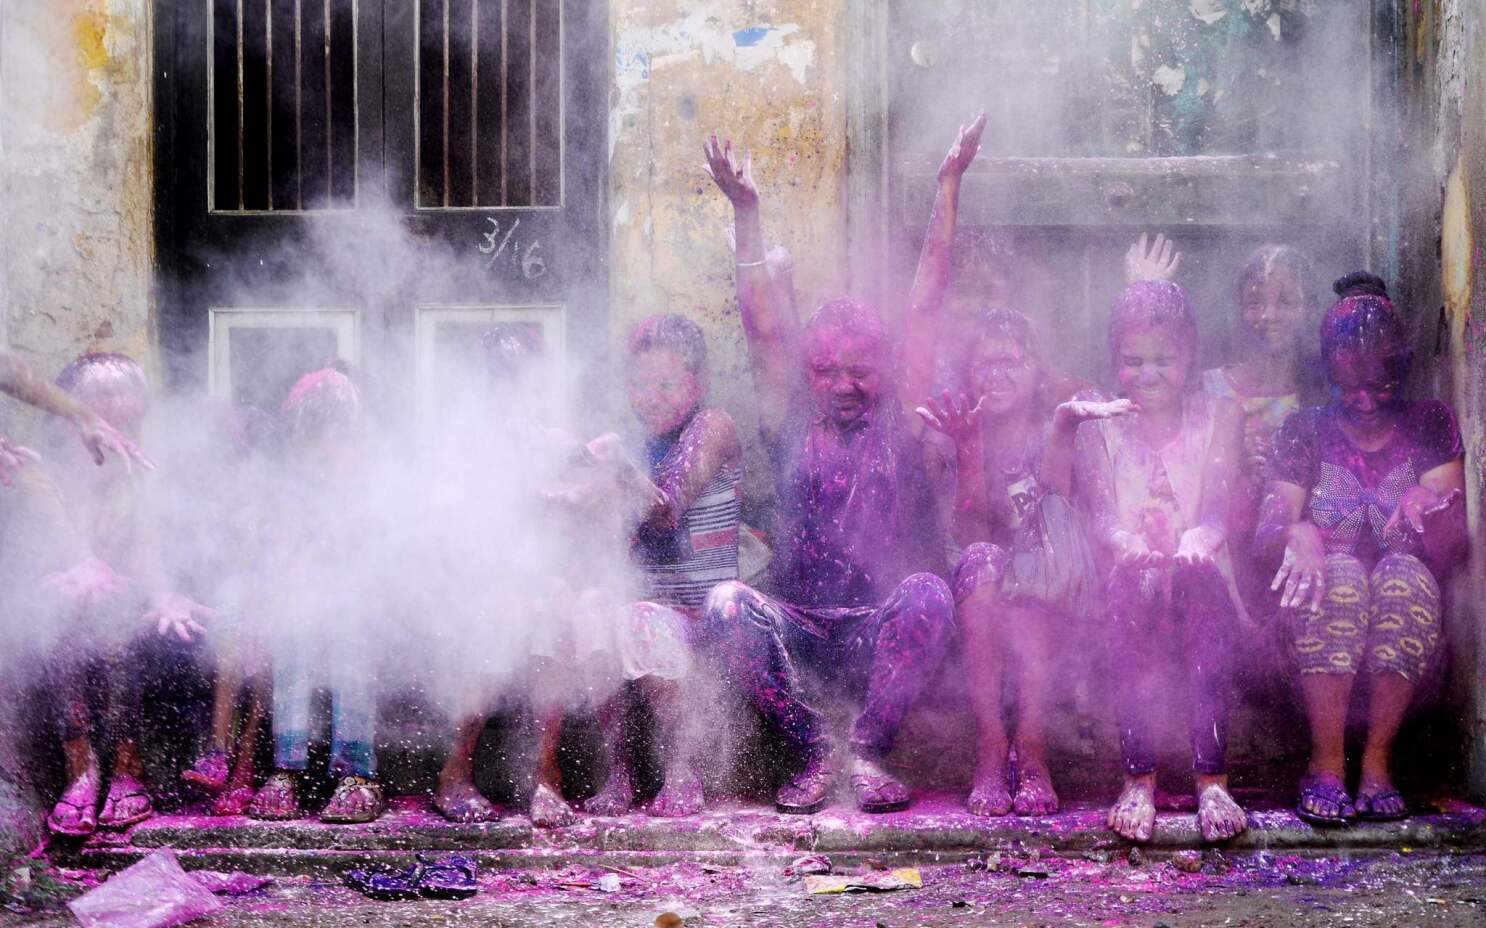 Holi Festival 2024 Travel Guide - India's Festival of Colors - The